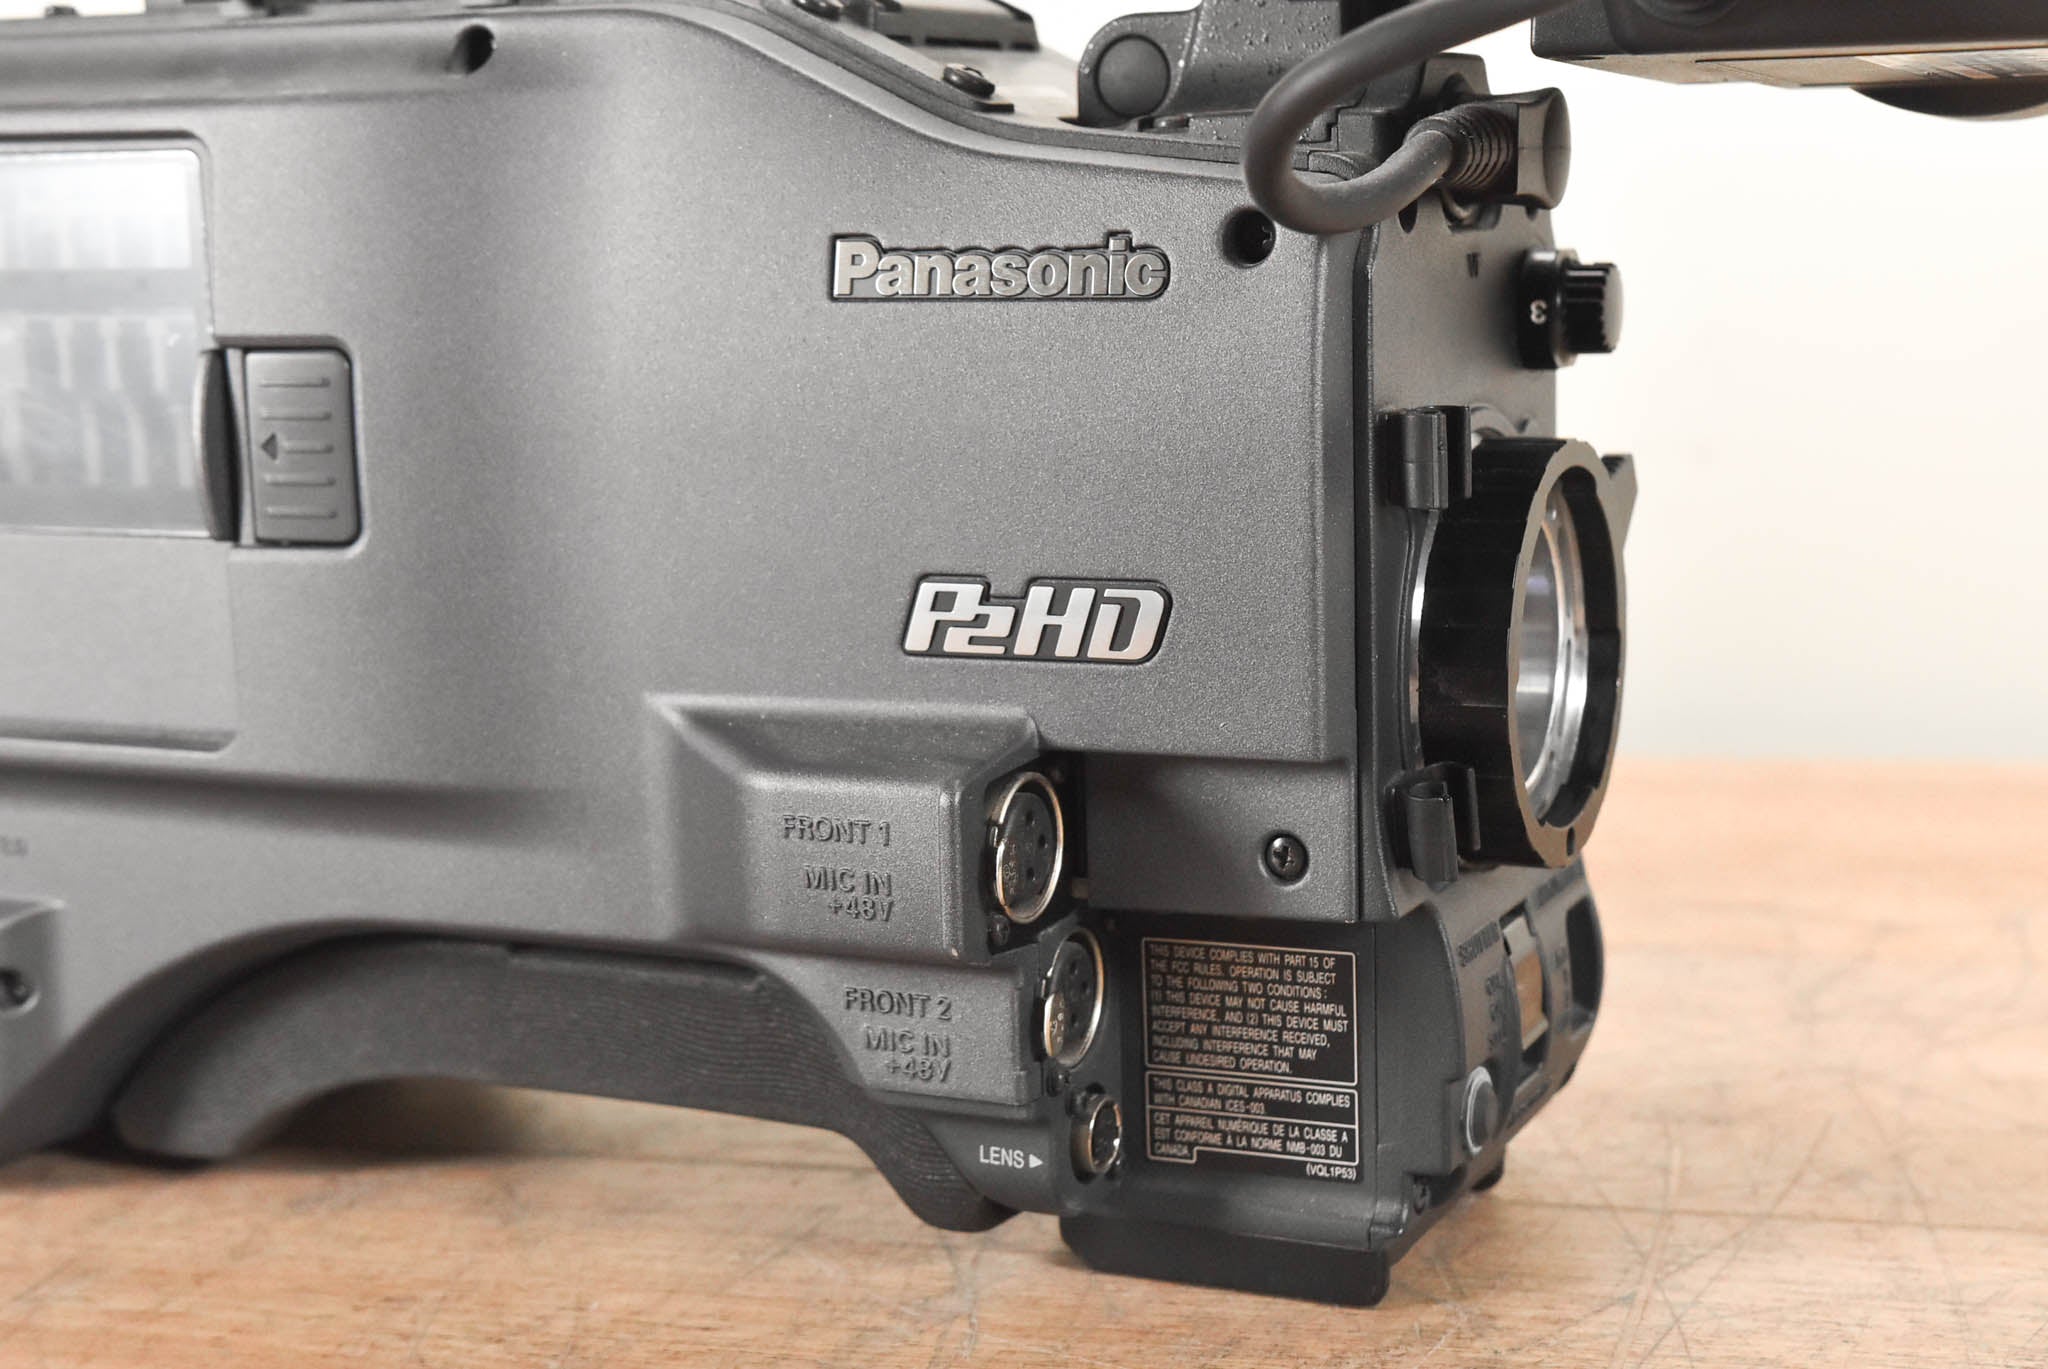 Panasonic AG-HPX500P 2/3" Shoulder Mounted P2HD Camcorder